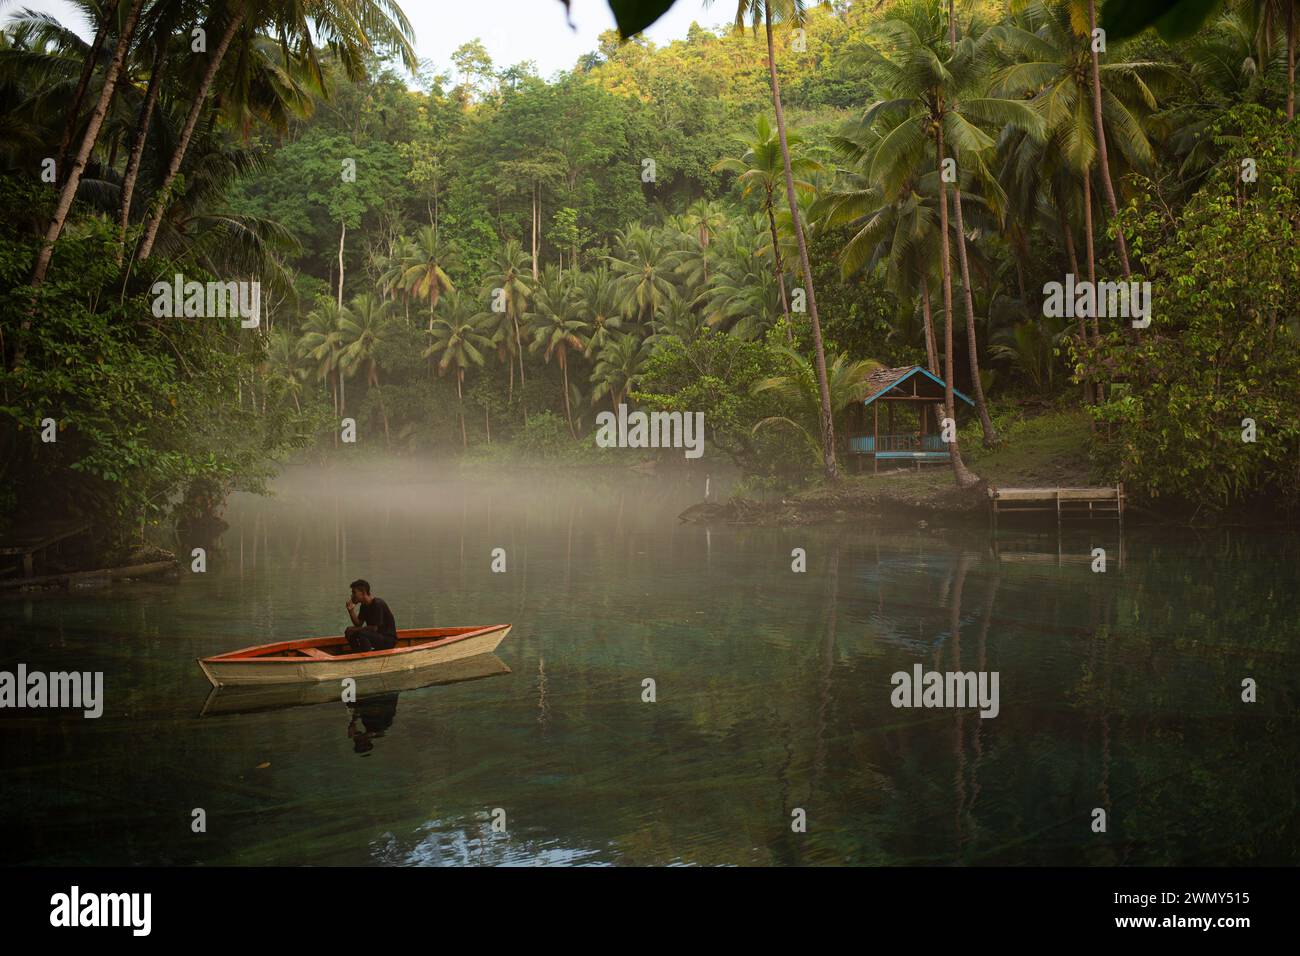 Un uomo in barca al lago Paisu Pok a Luk Panenteng, Banggai, Sulawesi, Indonesia. Foto Stock